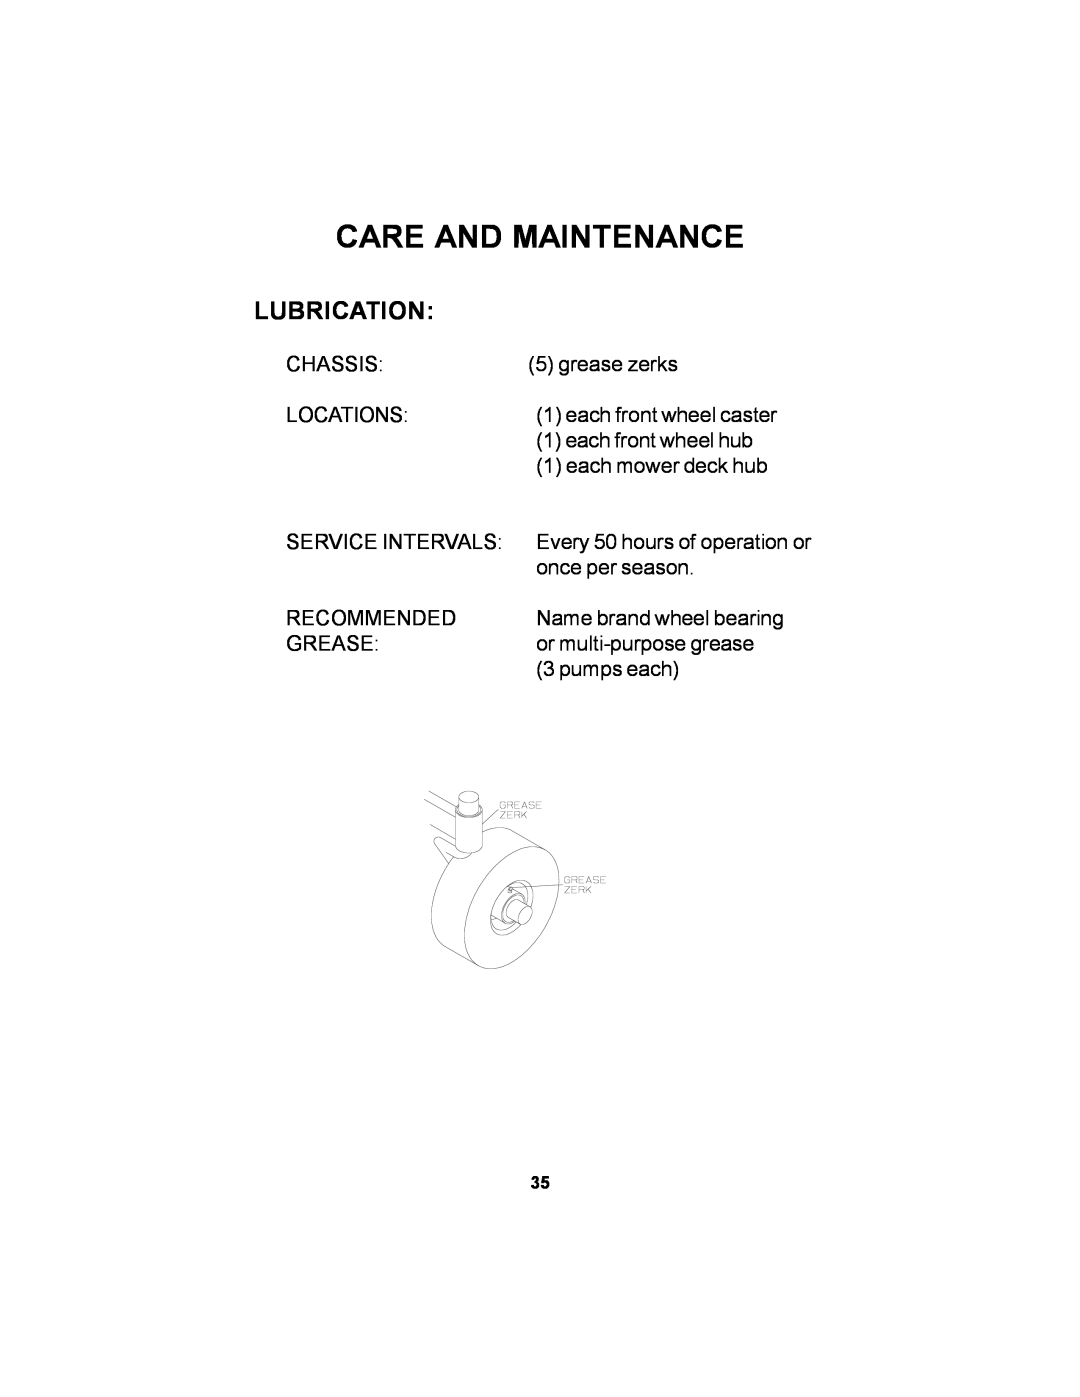 Dixon 14295-1005 manual Lubrication, Care And Maintenance 